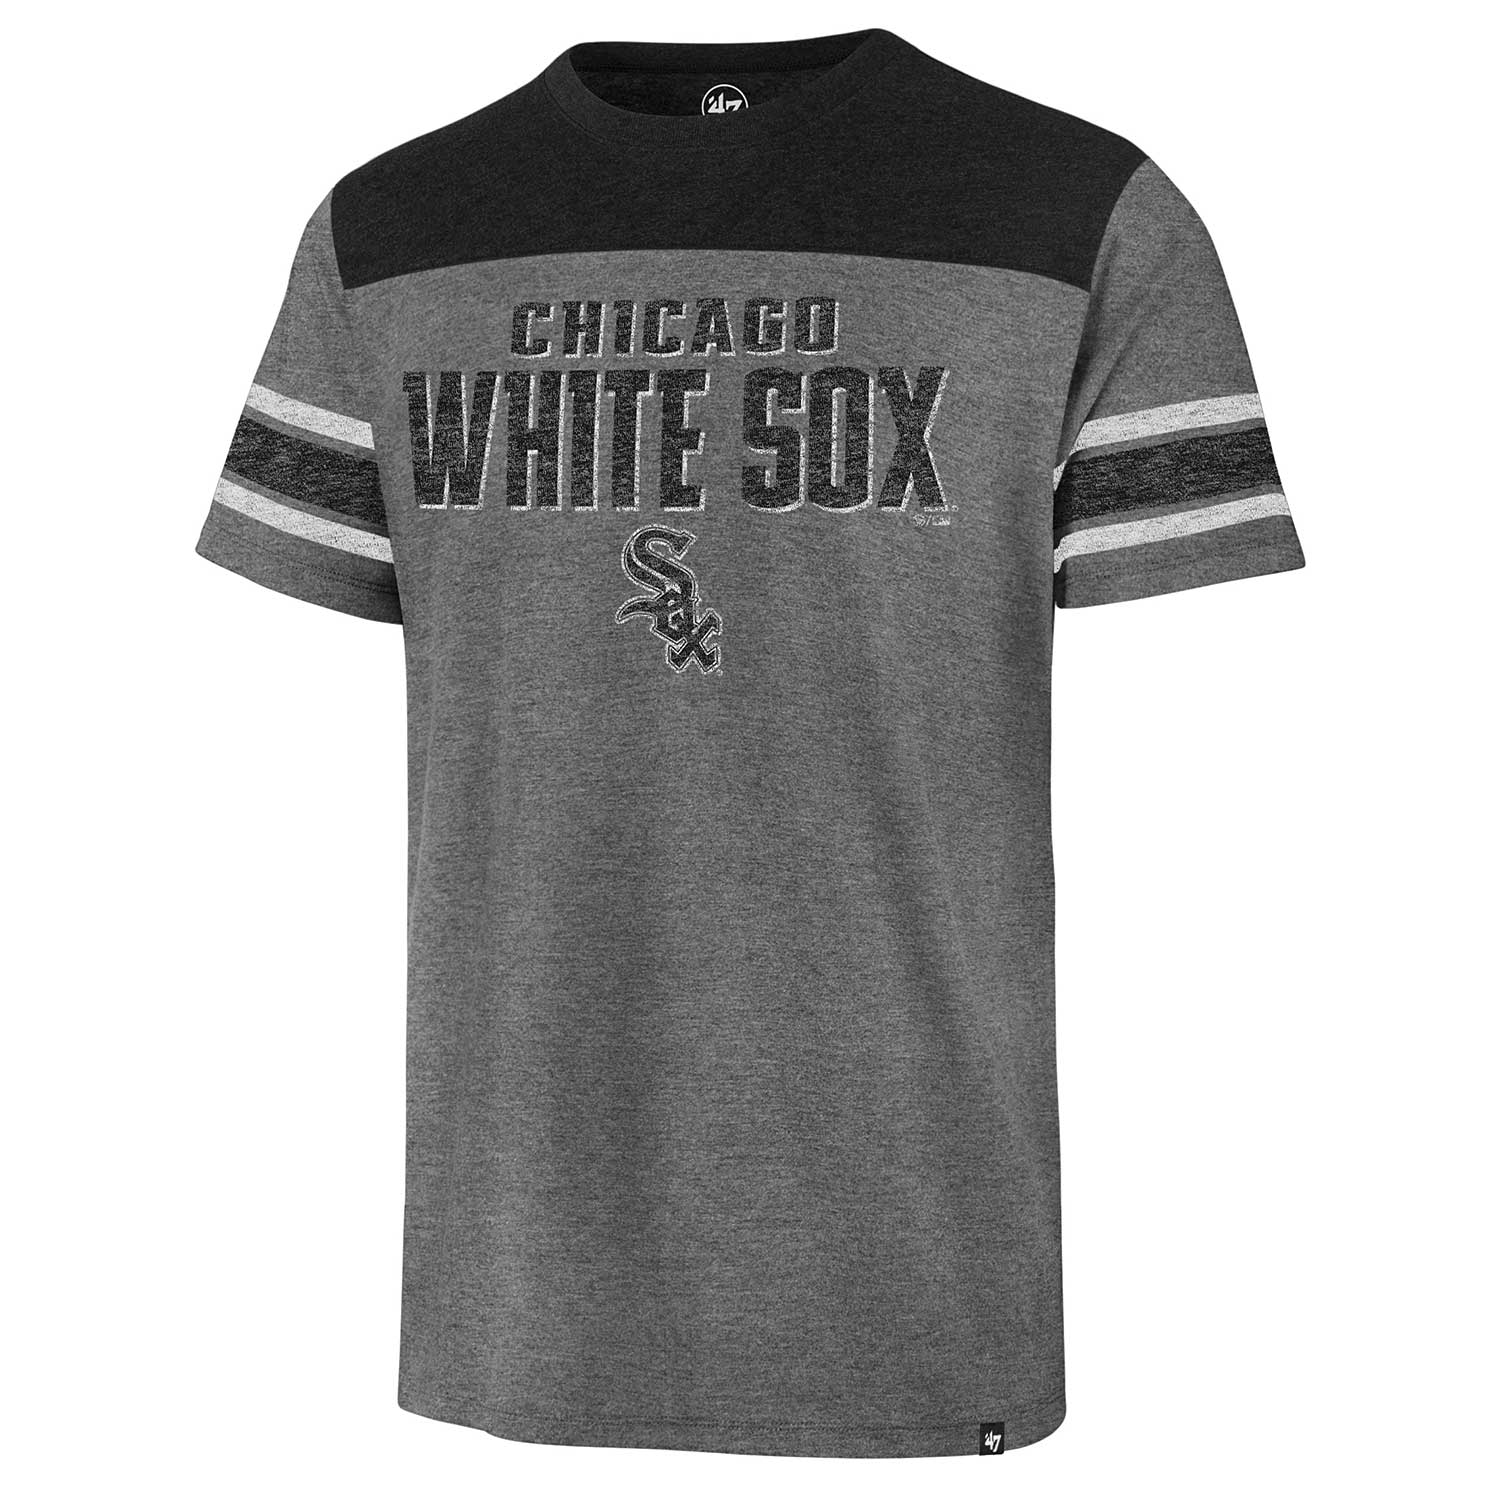 Official Chicago White Sox Jerseys, White Sox Baseball